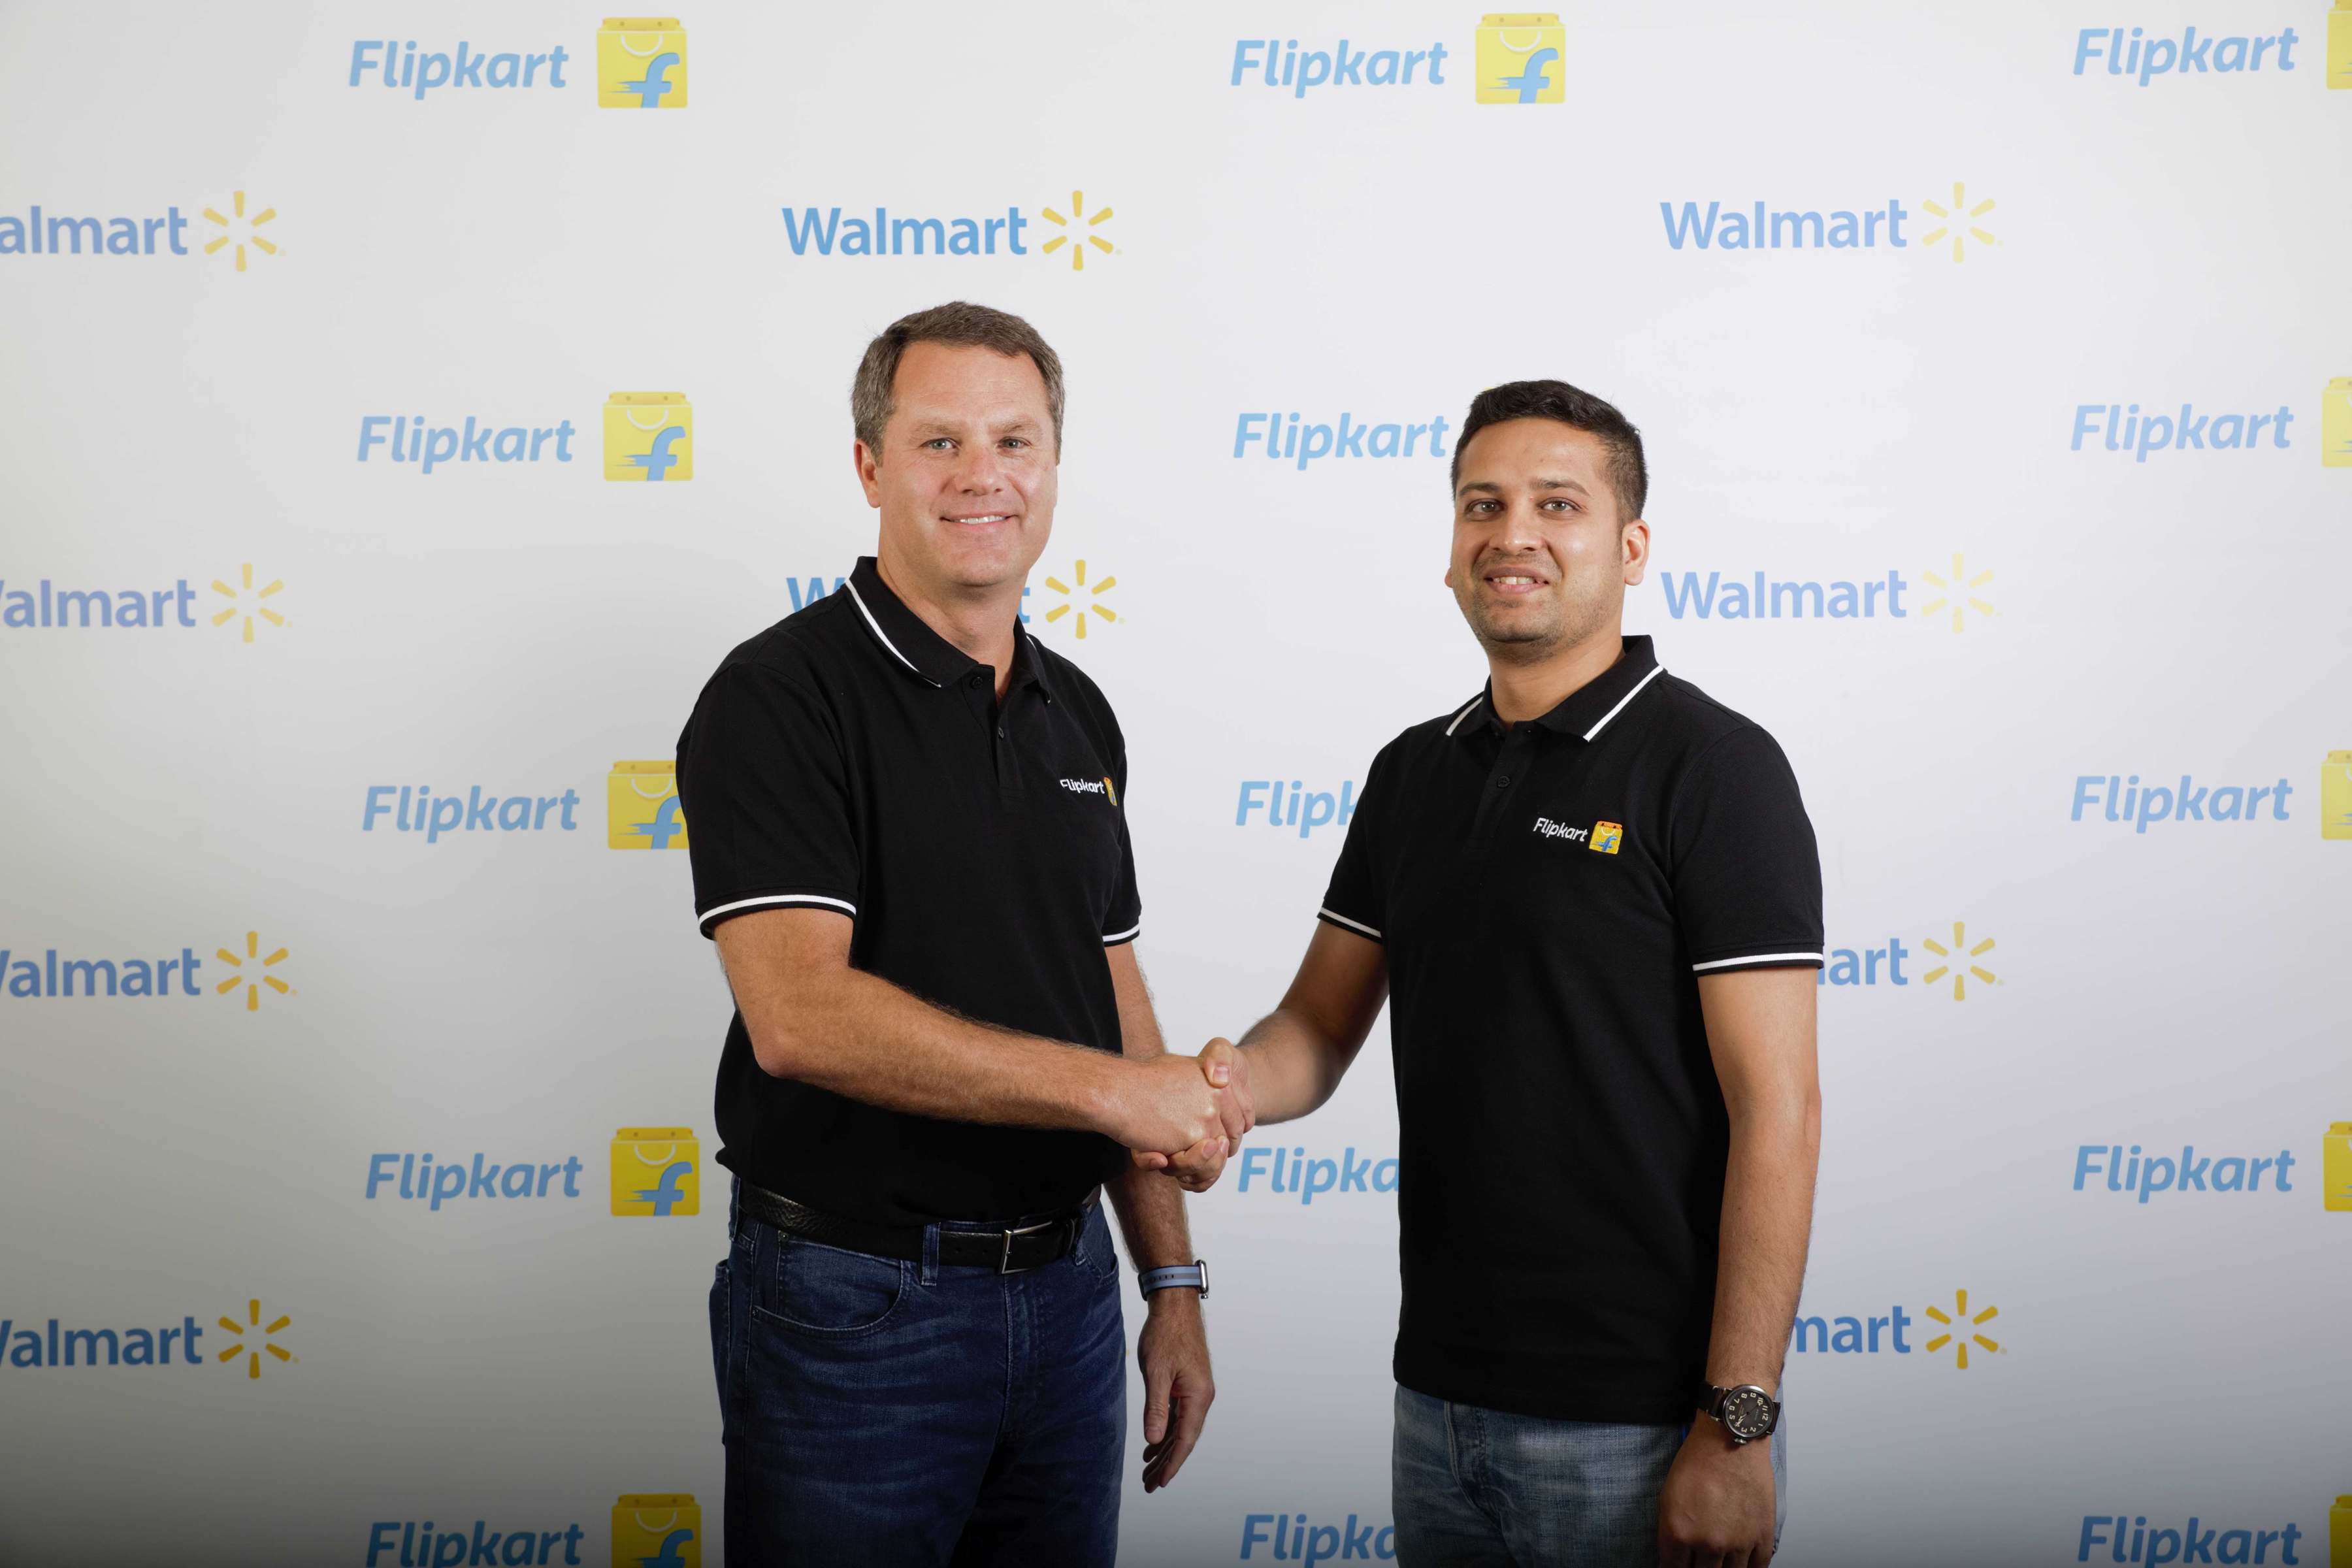 Walmart CEO Doug McMillon shakes hands and poses with Flipkart co-founder Binny Bansal